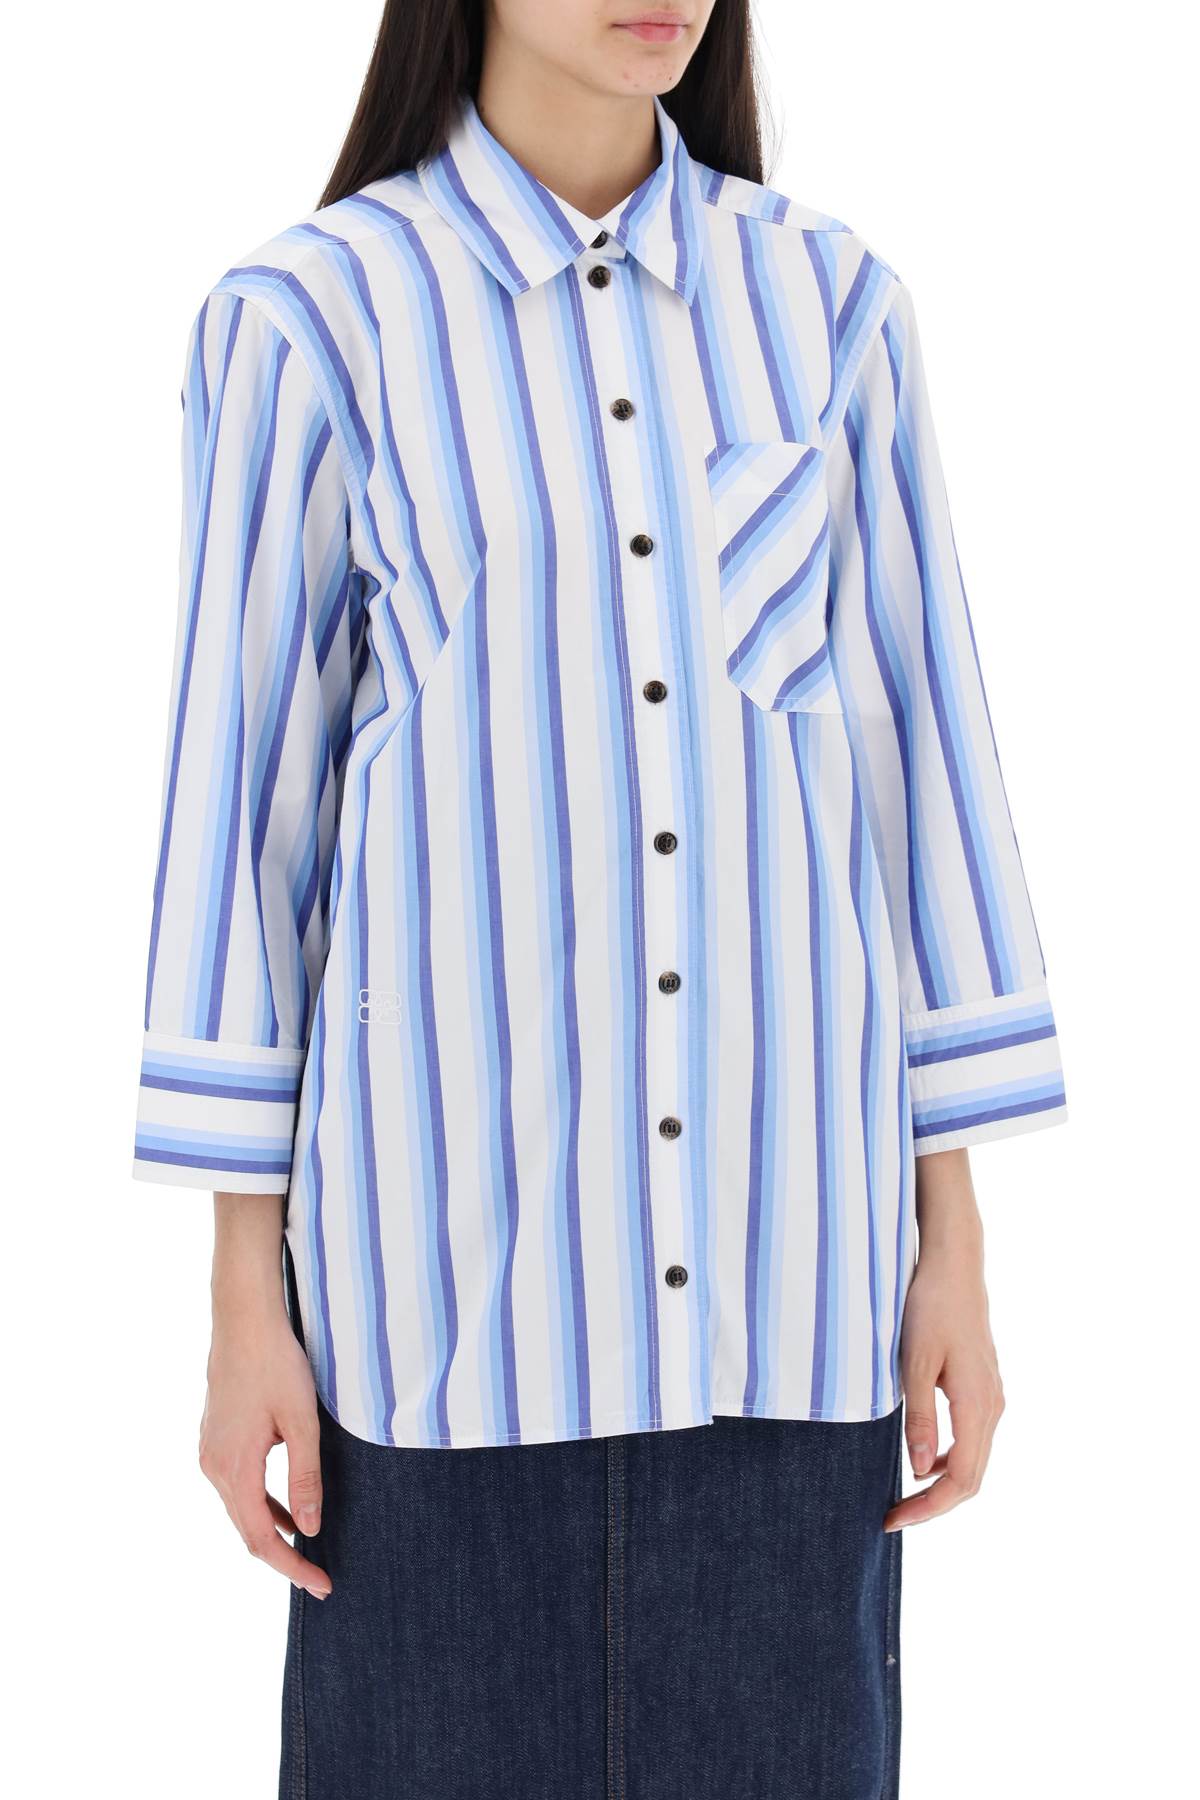 Ganni "oversized striped poplin shirt-1